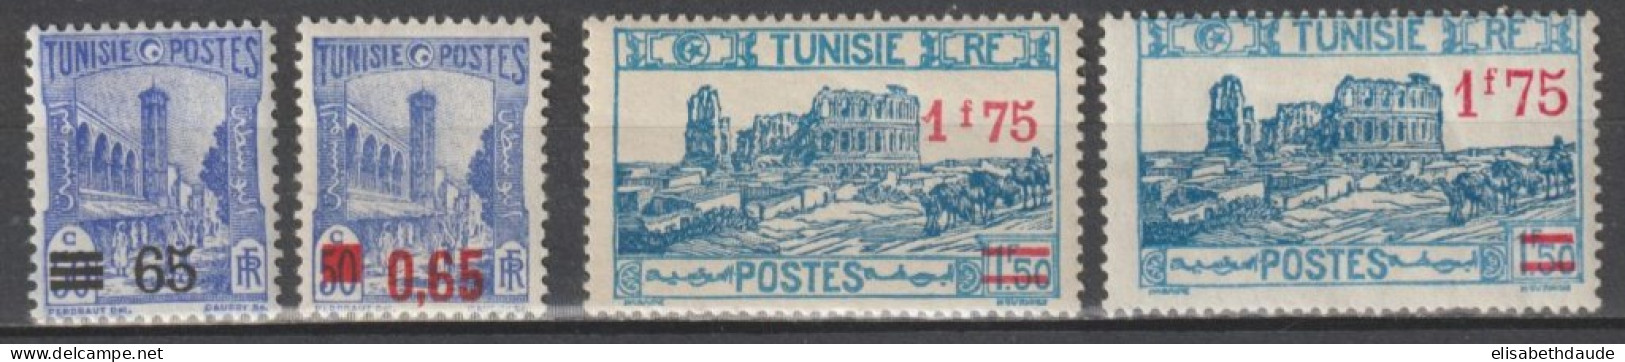 TUNISIE - 1937 - ANNEE COMPLETE - YVERT N° 182/184A * MLH - COTE = 21.75 EUR. - Neufs